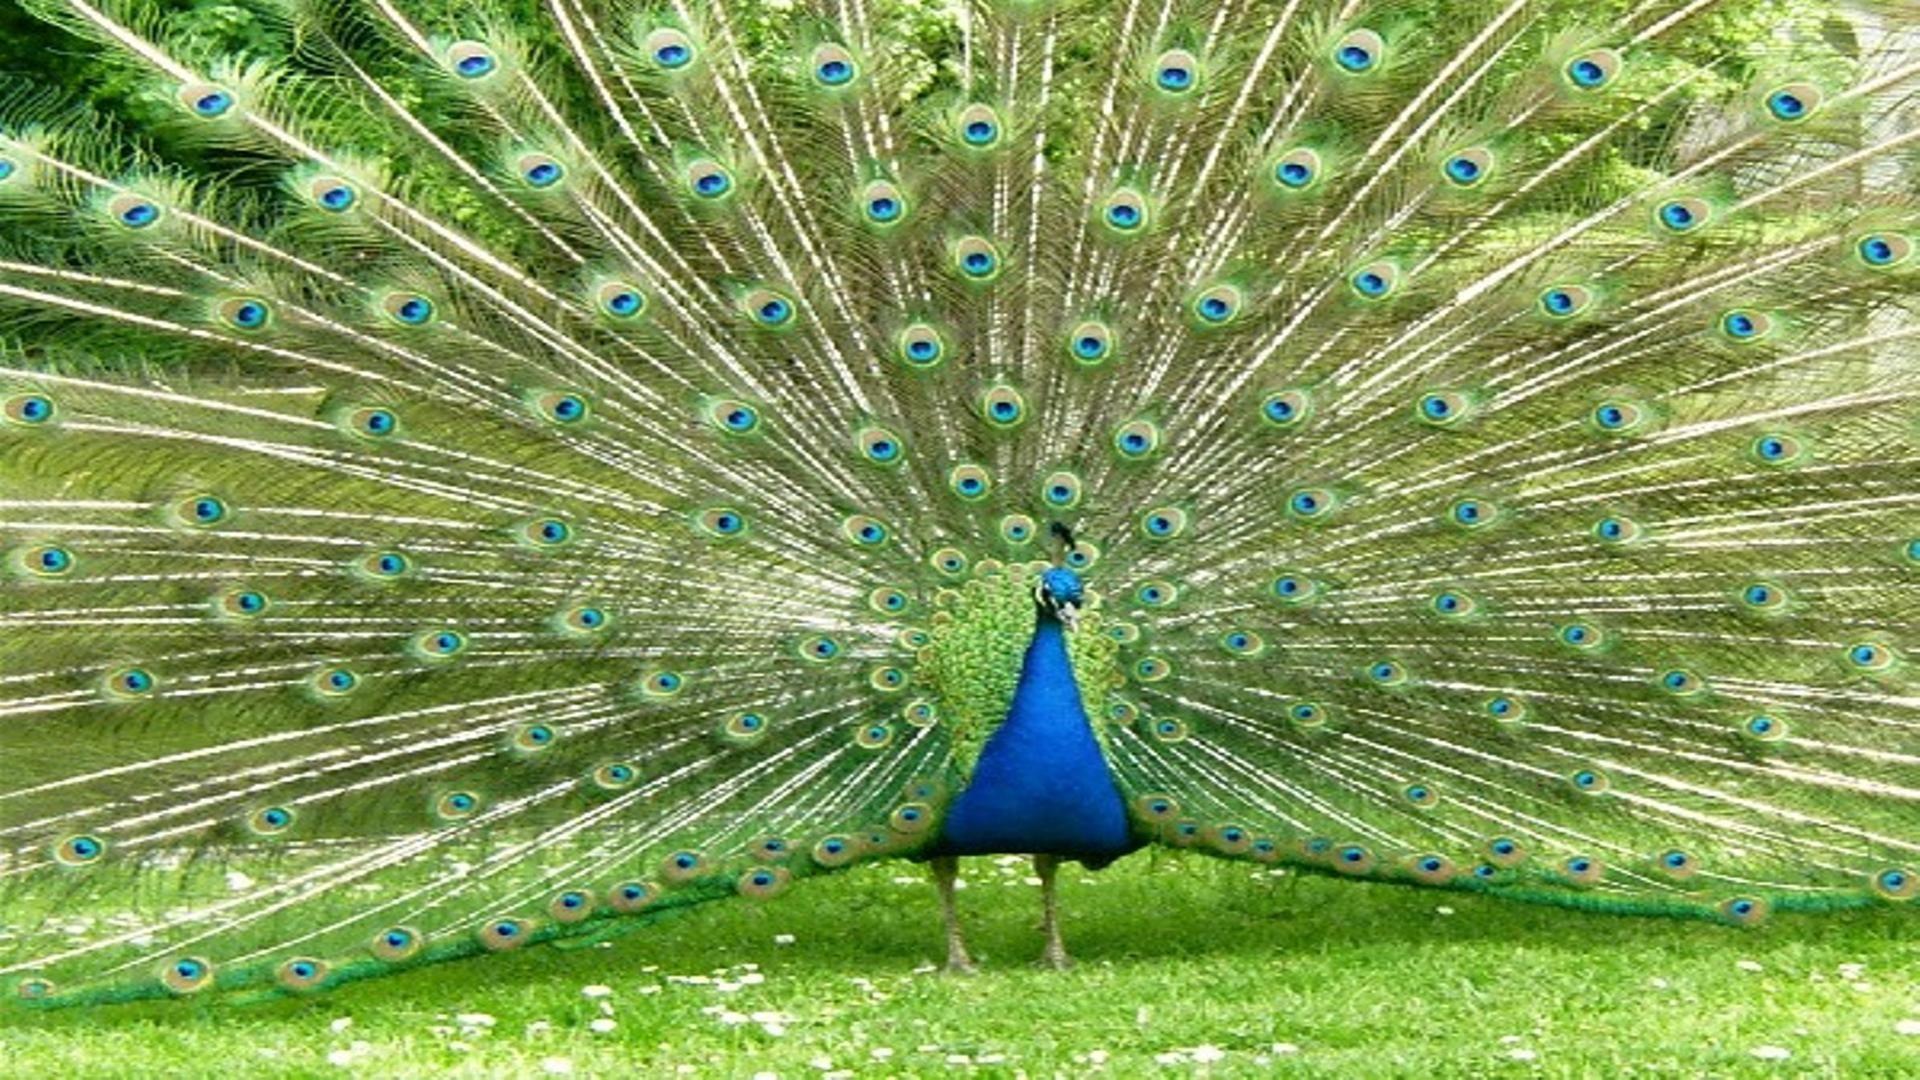 Male Peacocks